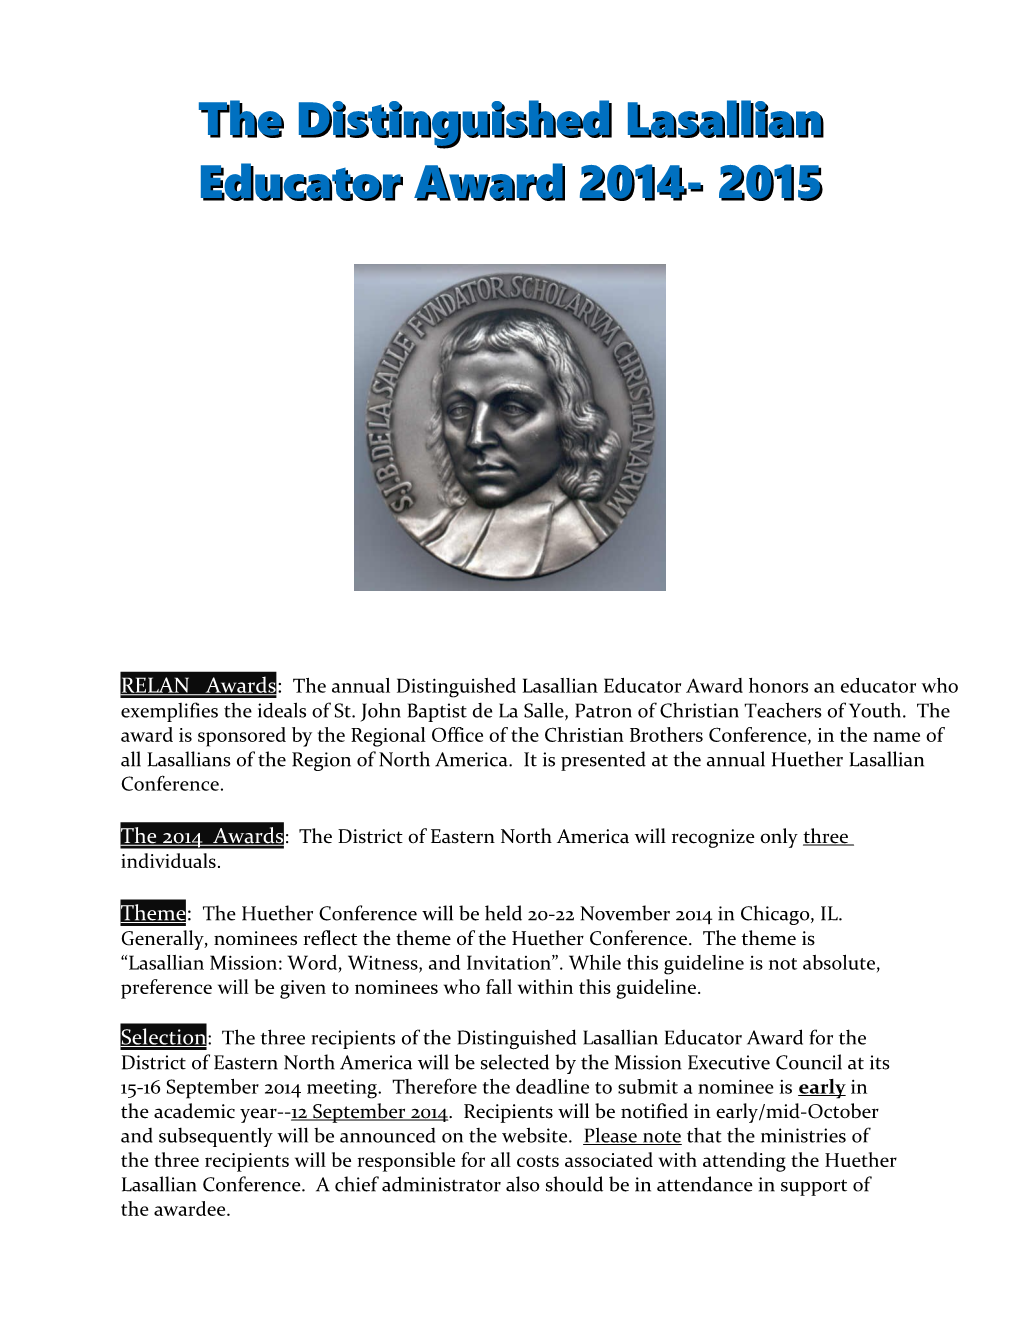 The Distinguished Lasallian Educator Award